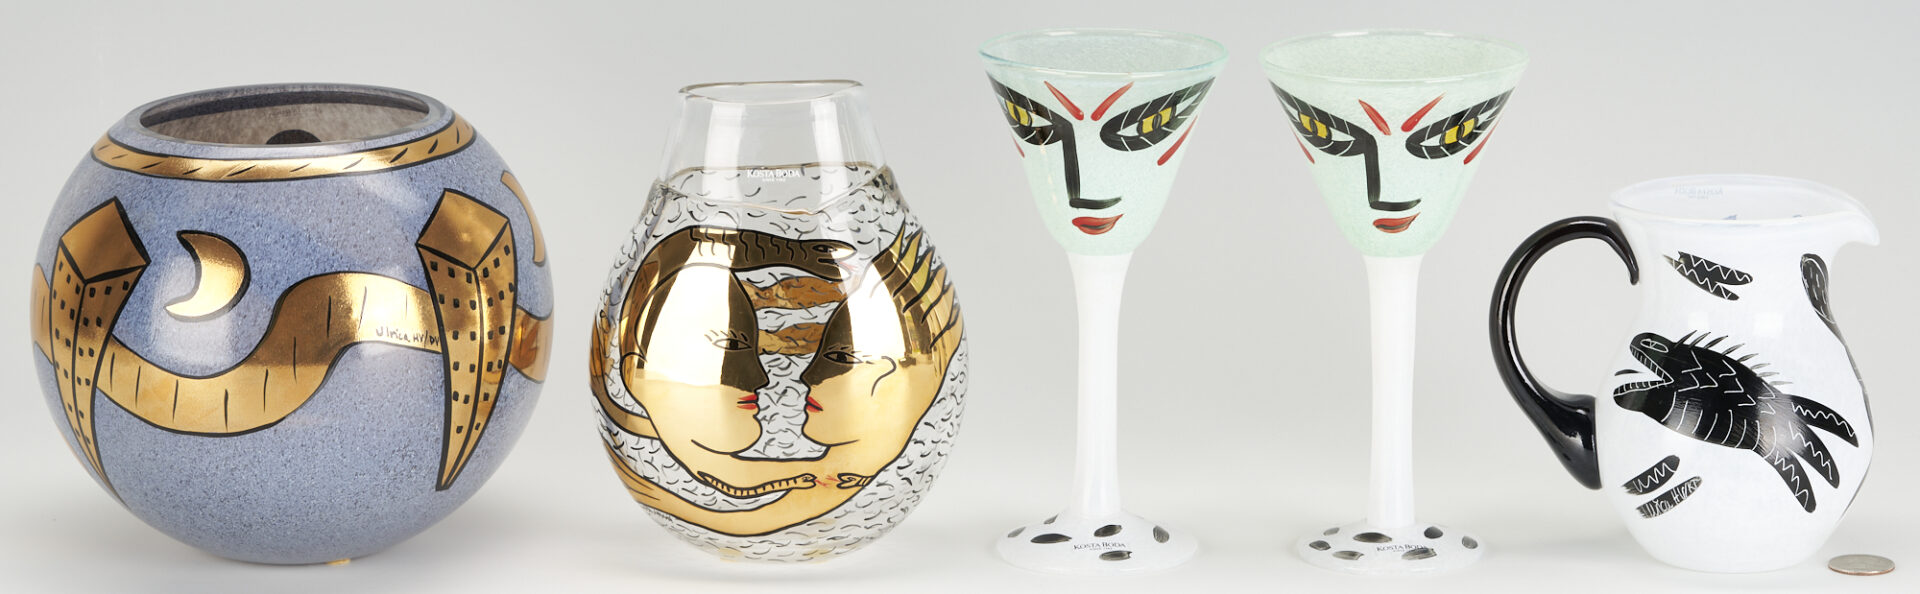 Lot 948: 5 pcs. Kosta Boda Art Glass by Ulrica Hydman Vallien